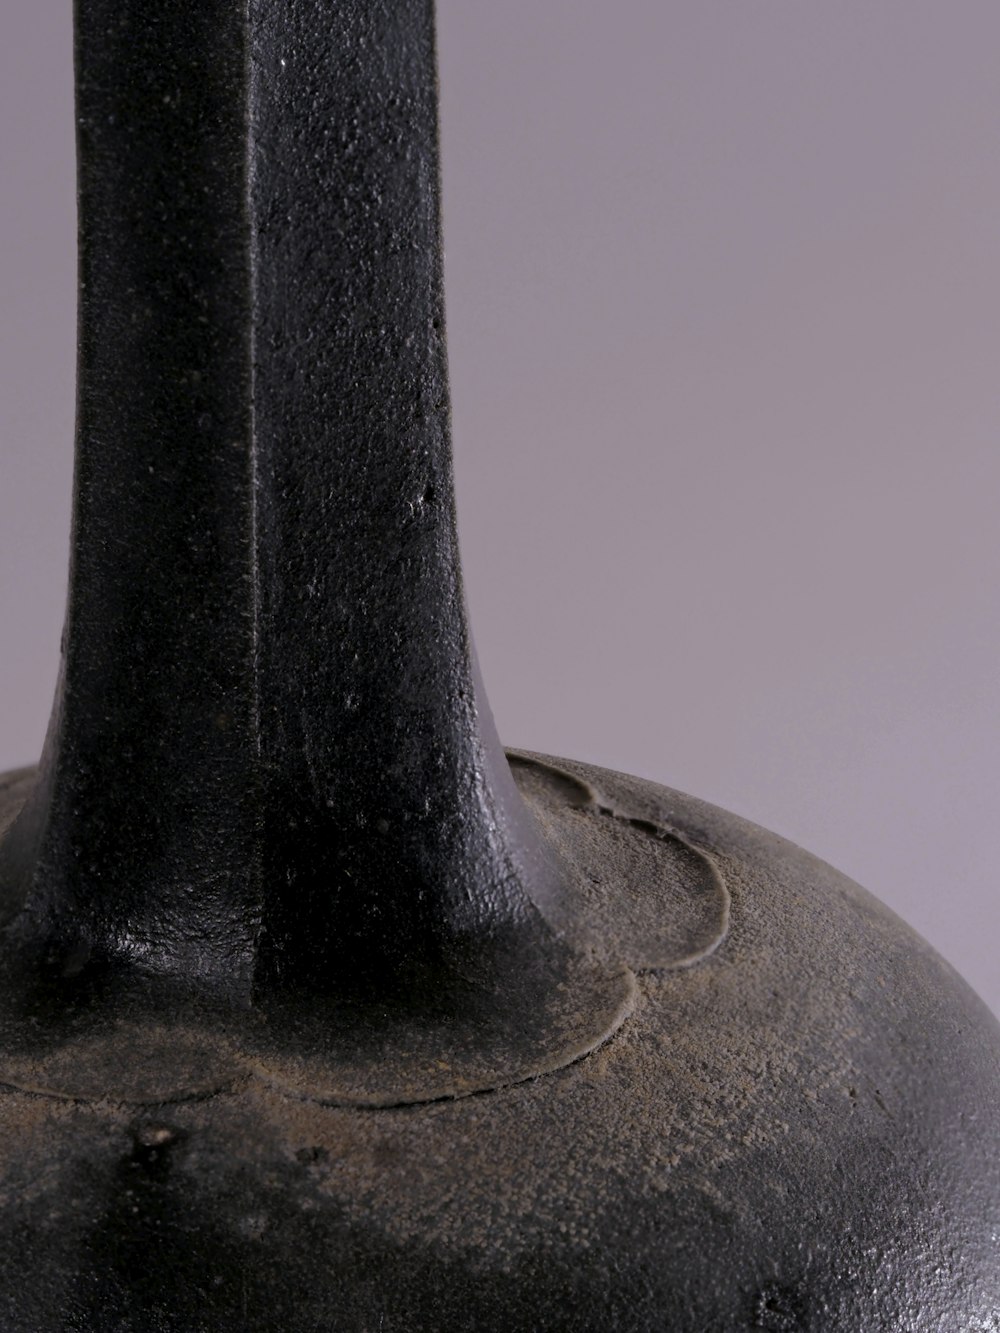 black and brown ceramic vase